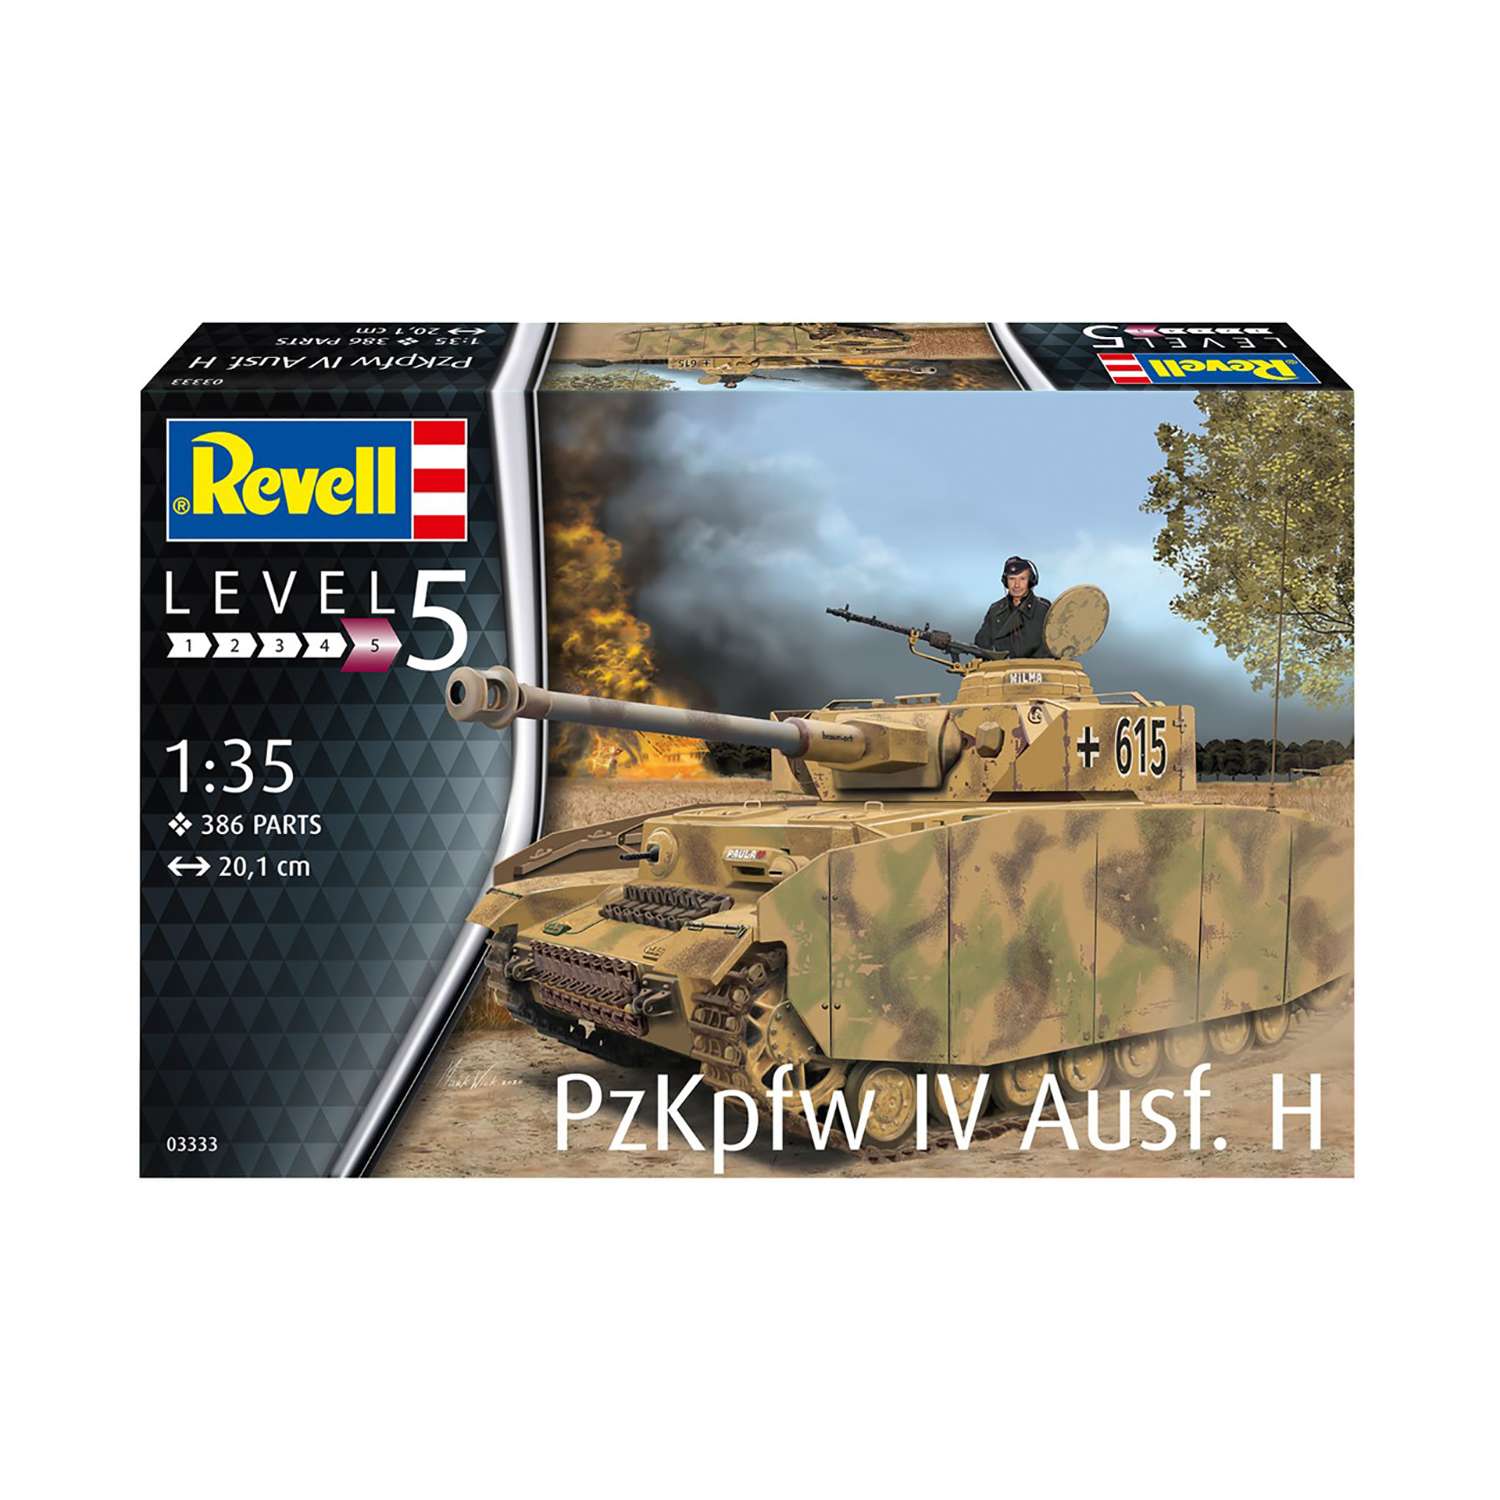 Сборная модель Revell Средний танк бронетанковых войск вермахта Panzer IV Ausf. H 03333 - фото 2